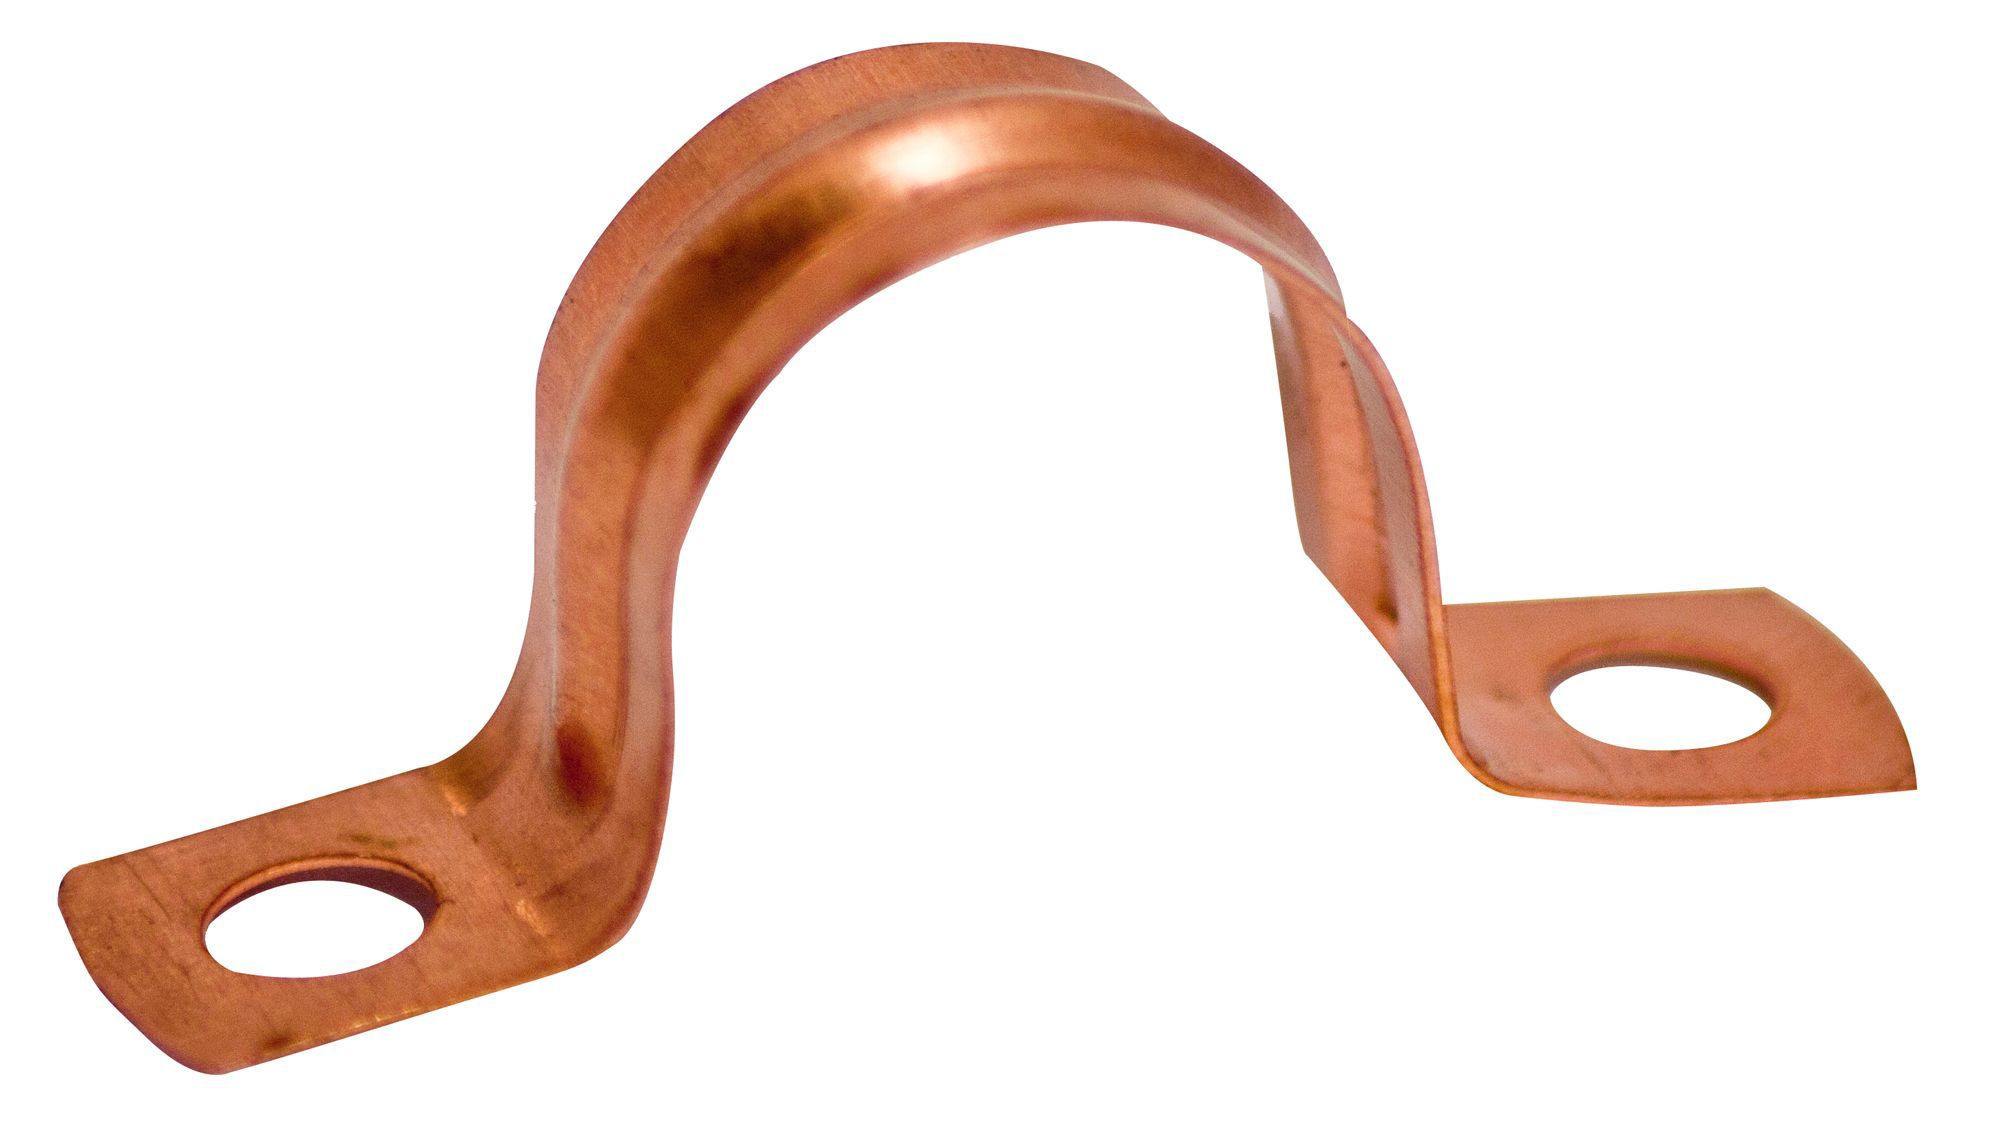 Plumbsure Copper Pipe clip V386QV3 (Dia)15mm, Pack of 10